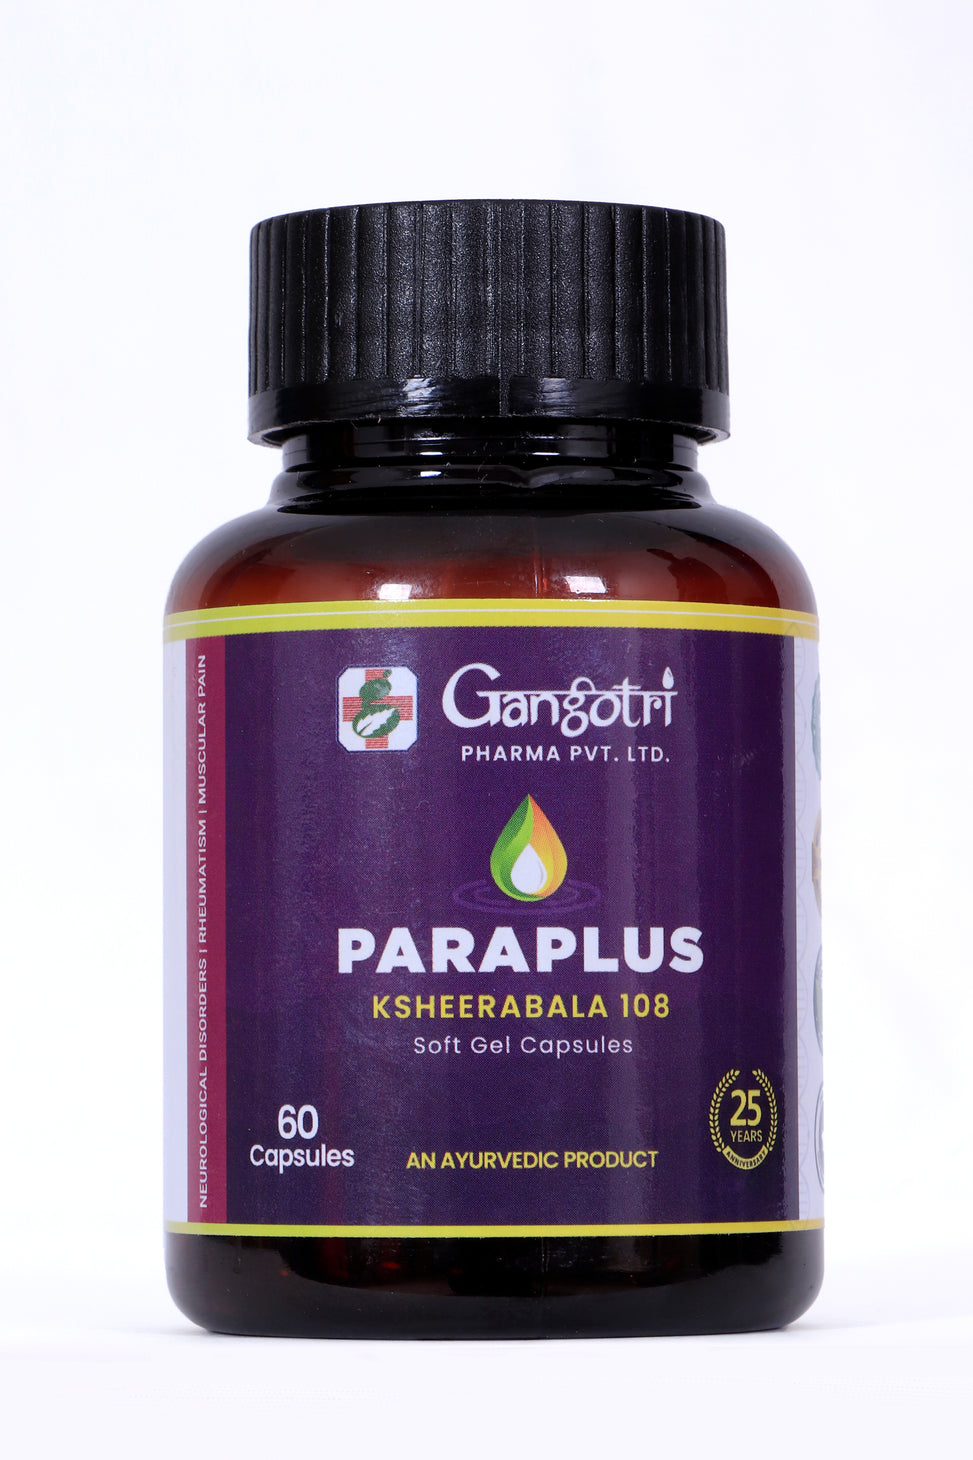 PARAPLUS Ksheerabala Soft Gel Capsules- Unlock Relief for Neurological Disorders and Arthritis